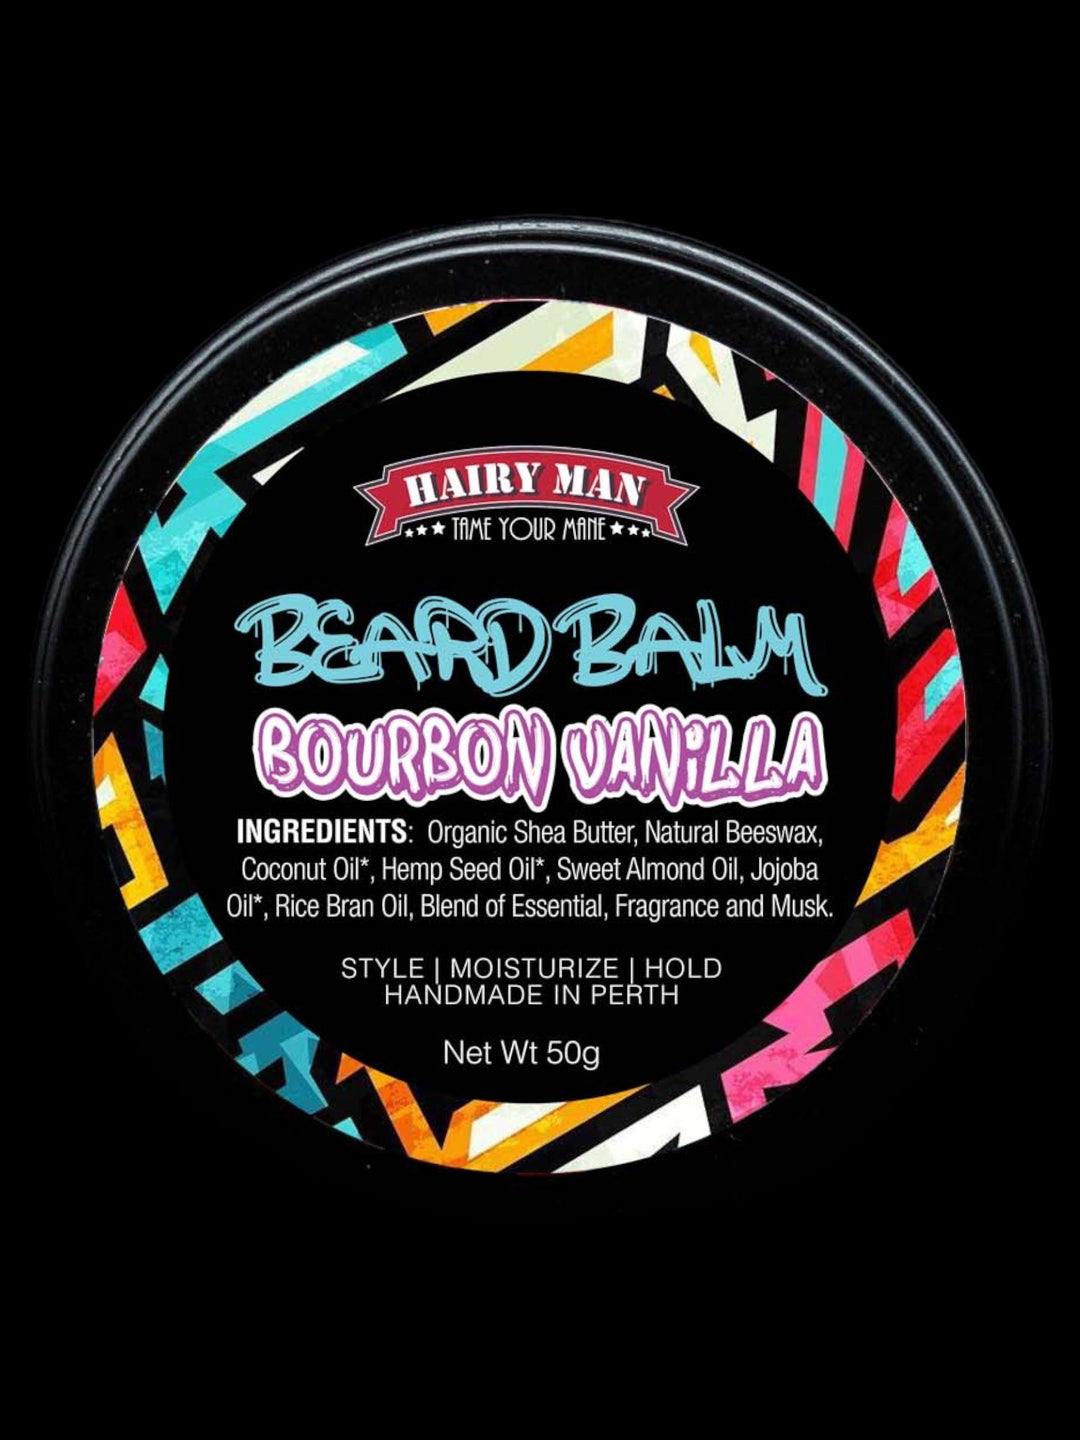 Hairy Man Care Bourbon Vanilla Beard Balm